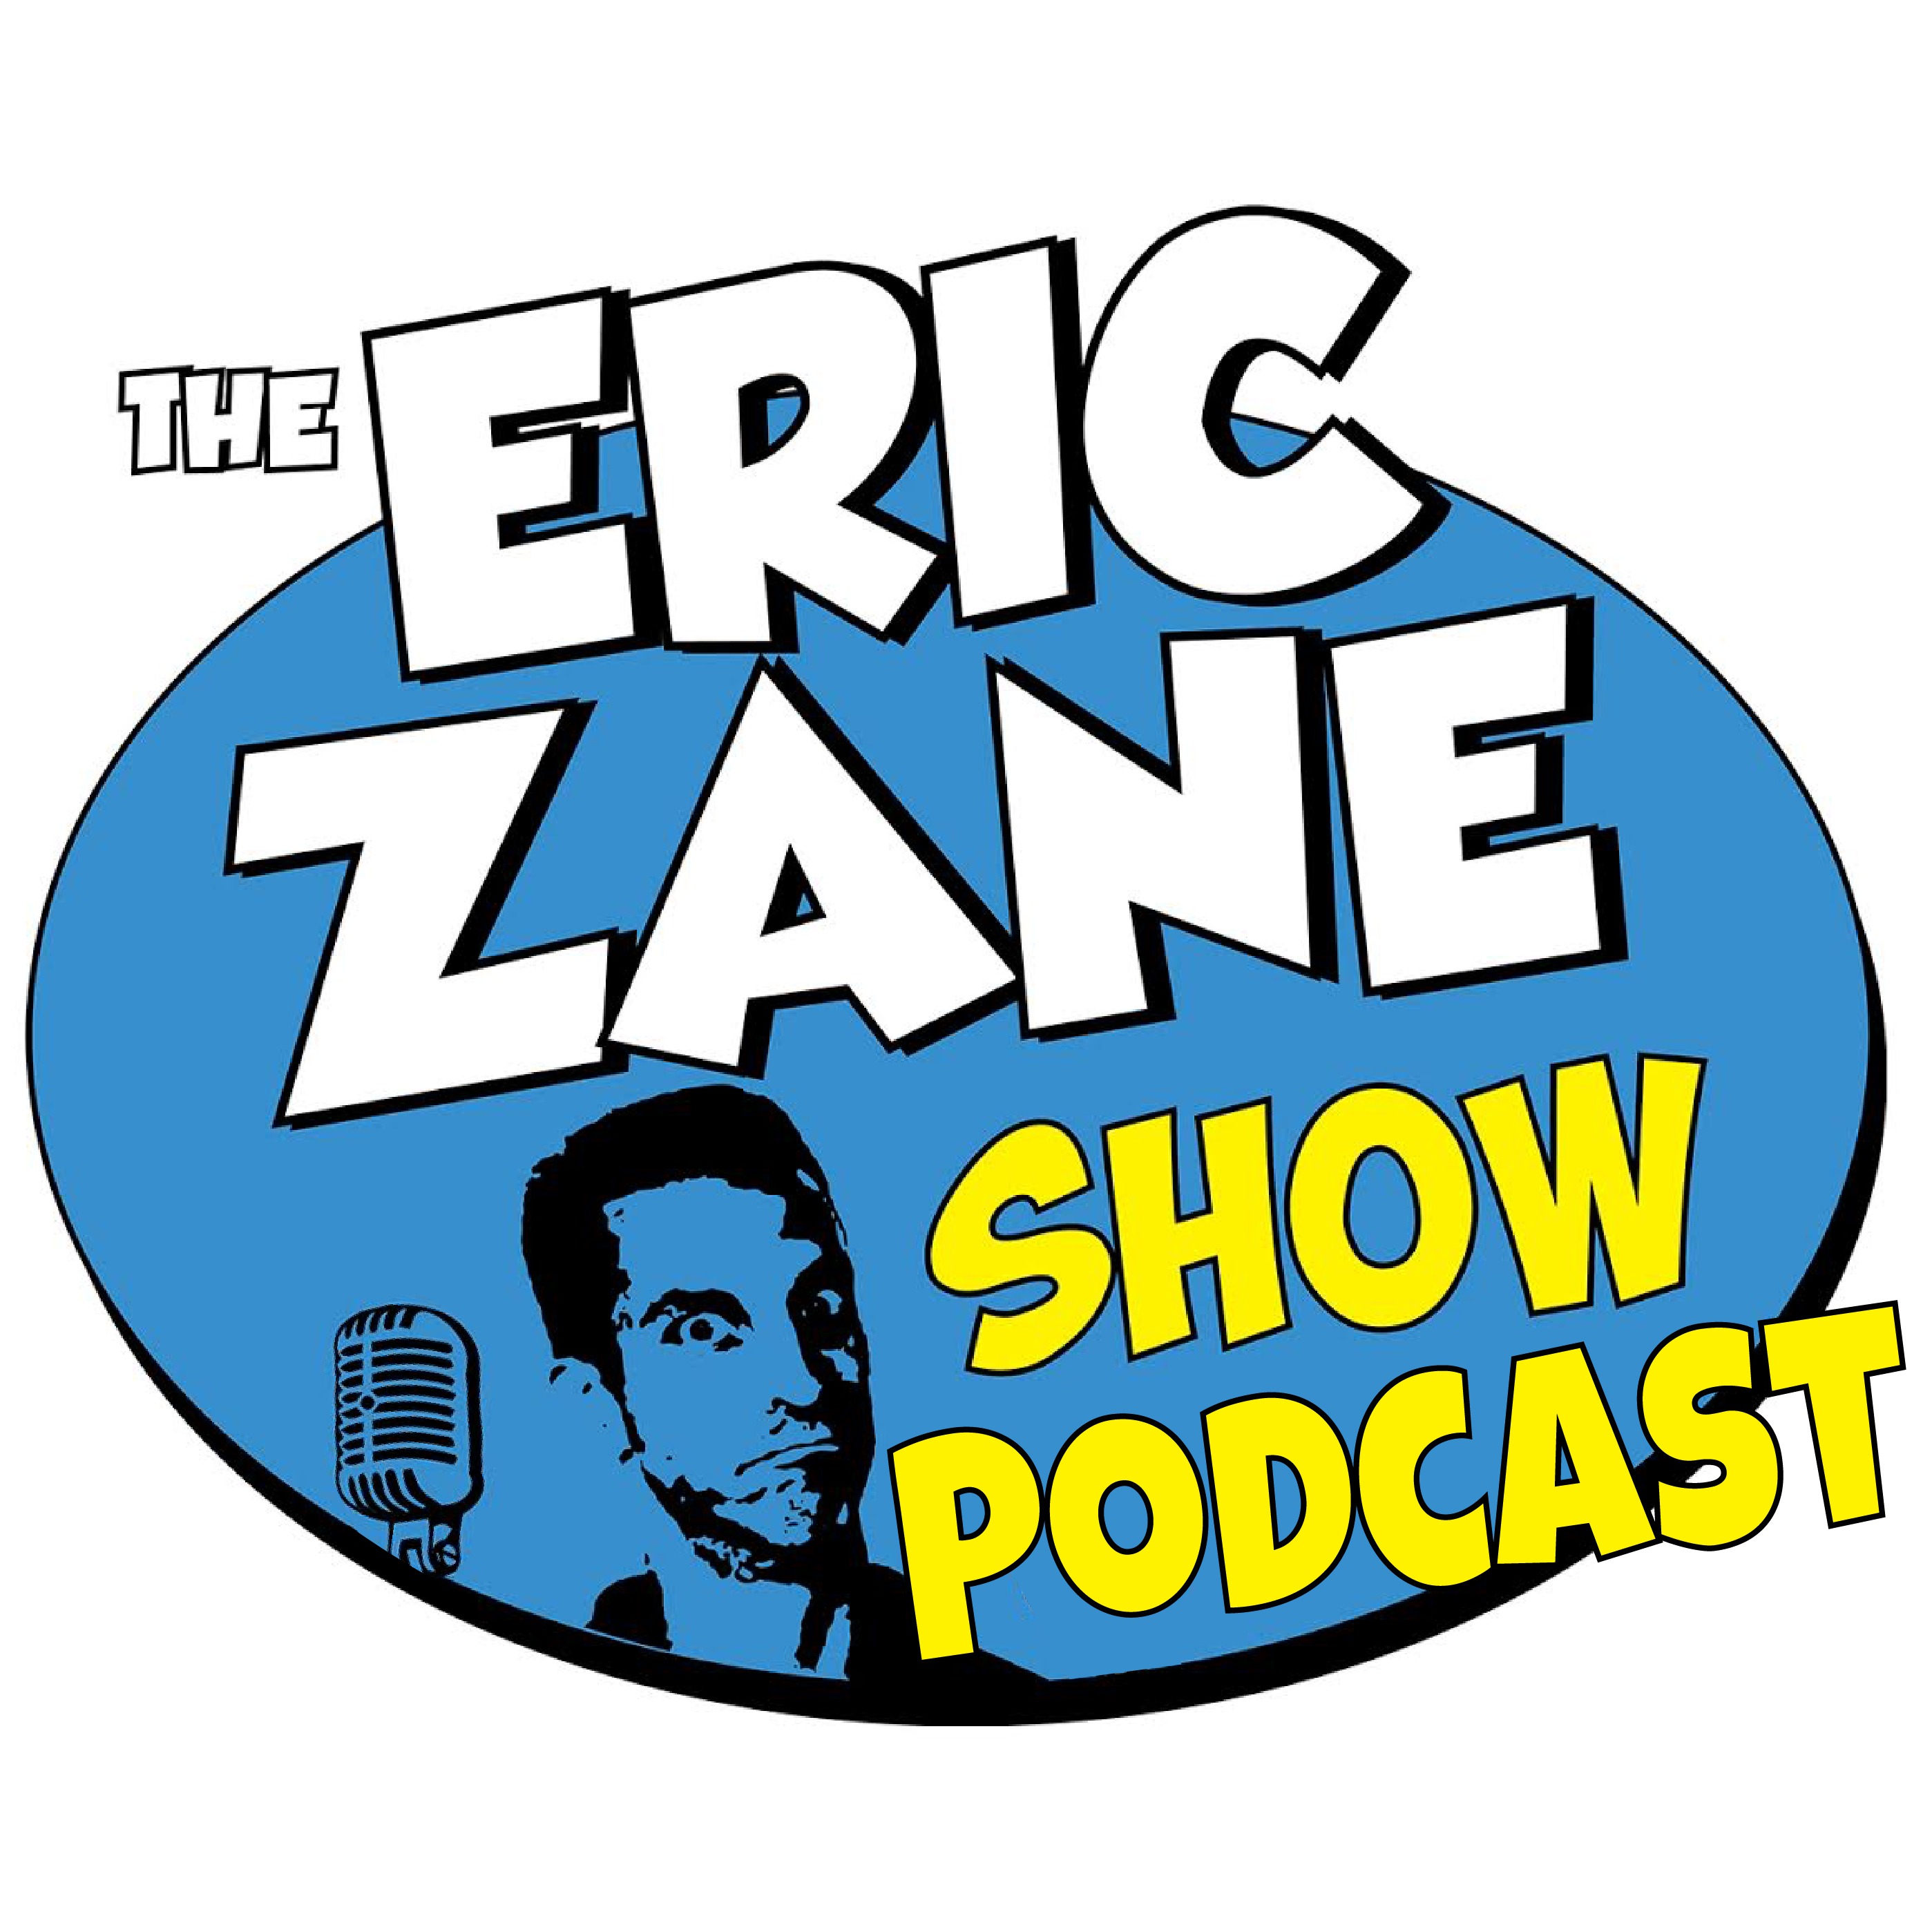 Eric Zane Show Podcast 817 Sit back and enjoy it